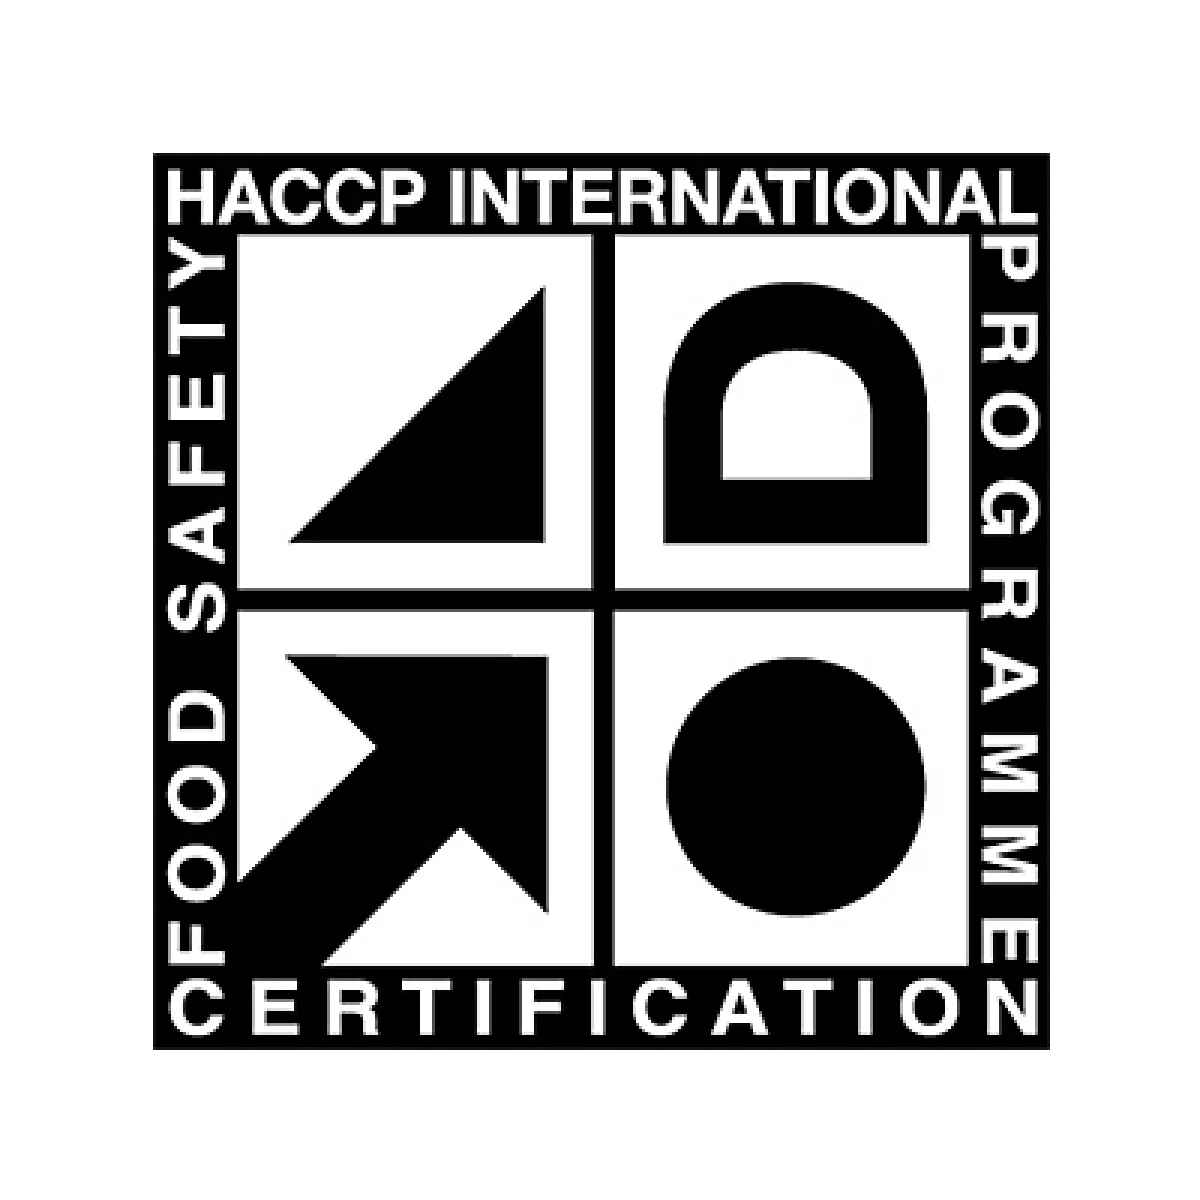 HACCP International Certificate